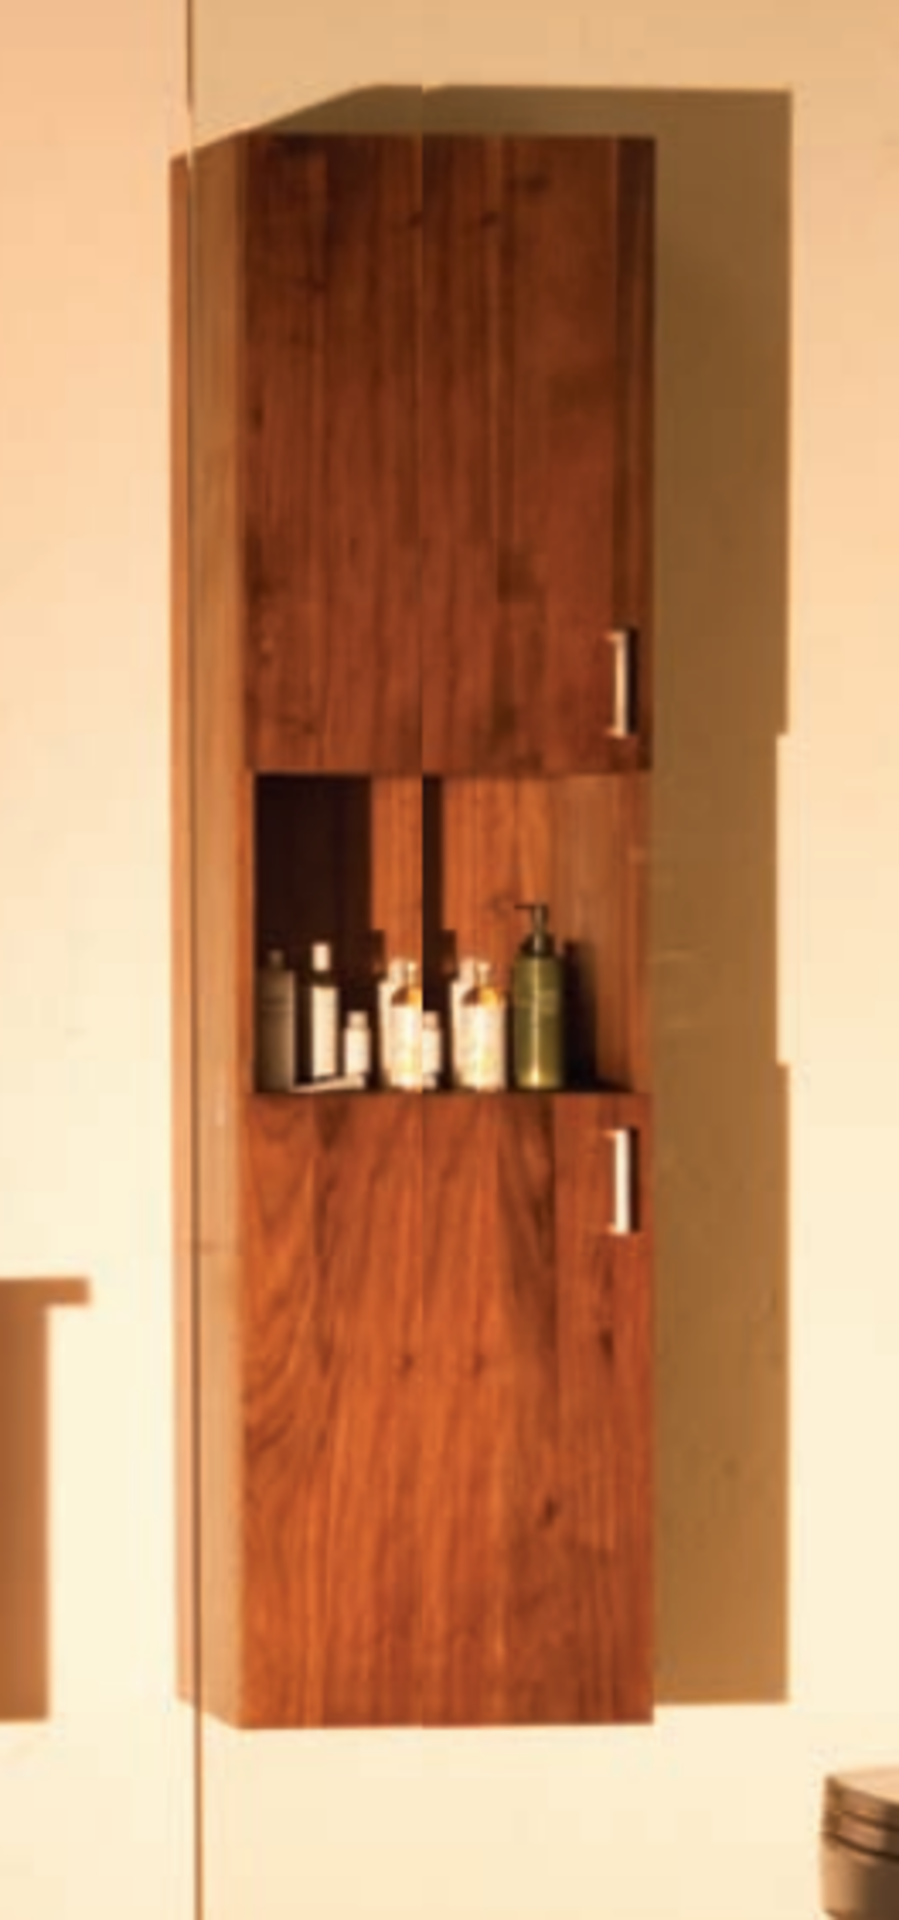 1 x Stonearth Wall Hung Tallboy Bathroom Storage Cabinet - American Solid Walnut - Original RRP £996 - Image 2 of 16